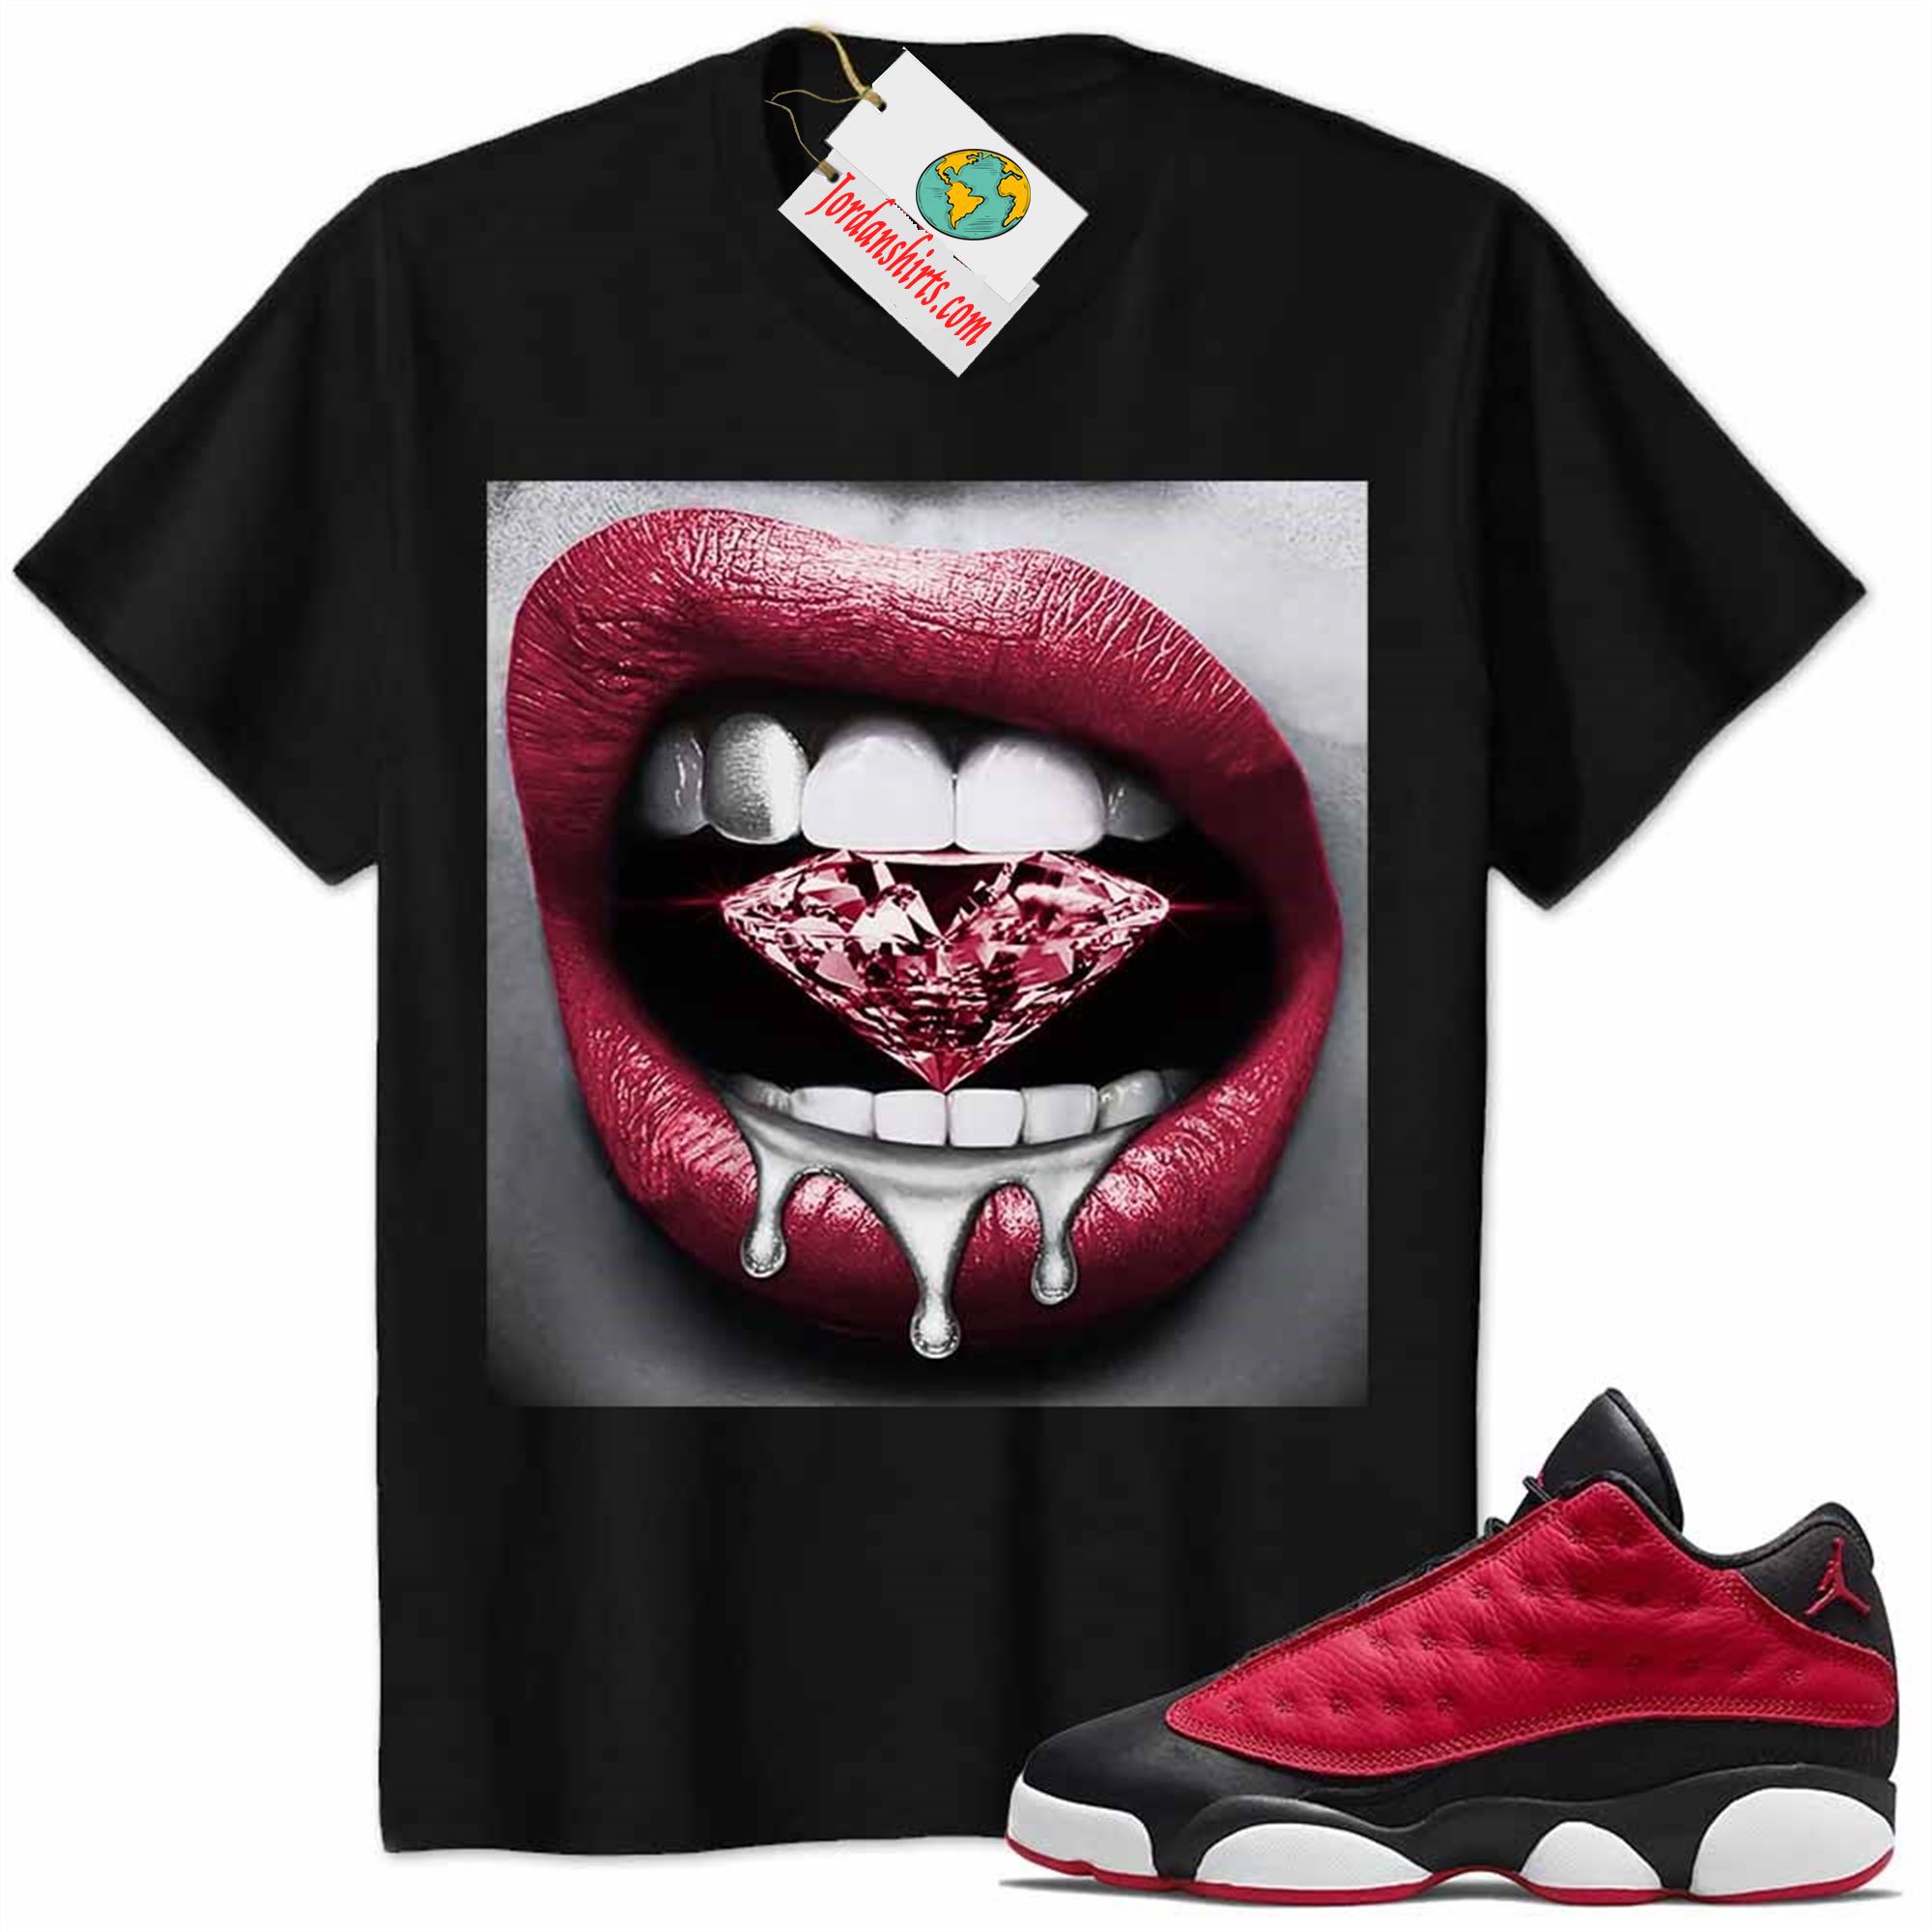 Jordan 13 Shirt, Jordan 13 Very Berry Shirt Sexy Lip Bite Diamond Dripping Black Full Size Up To 5xl